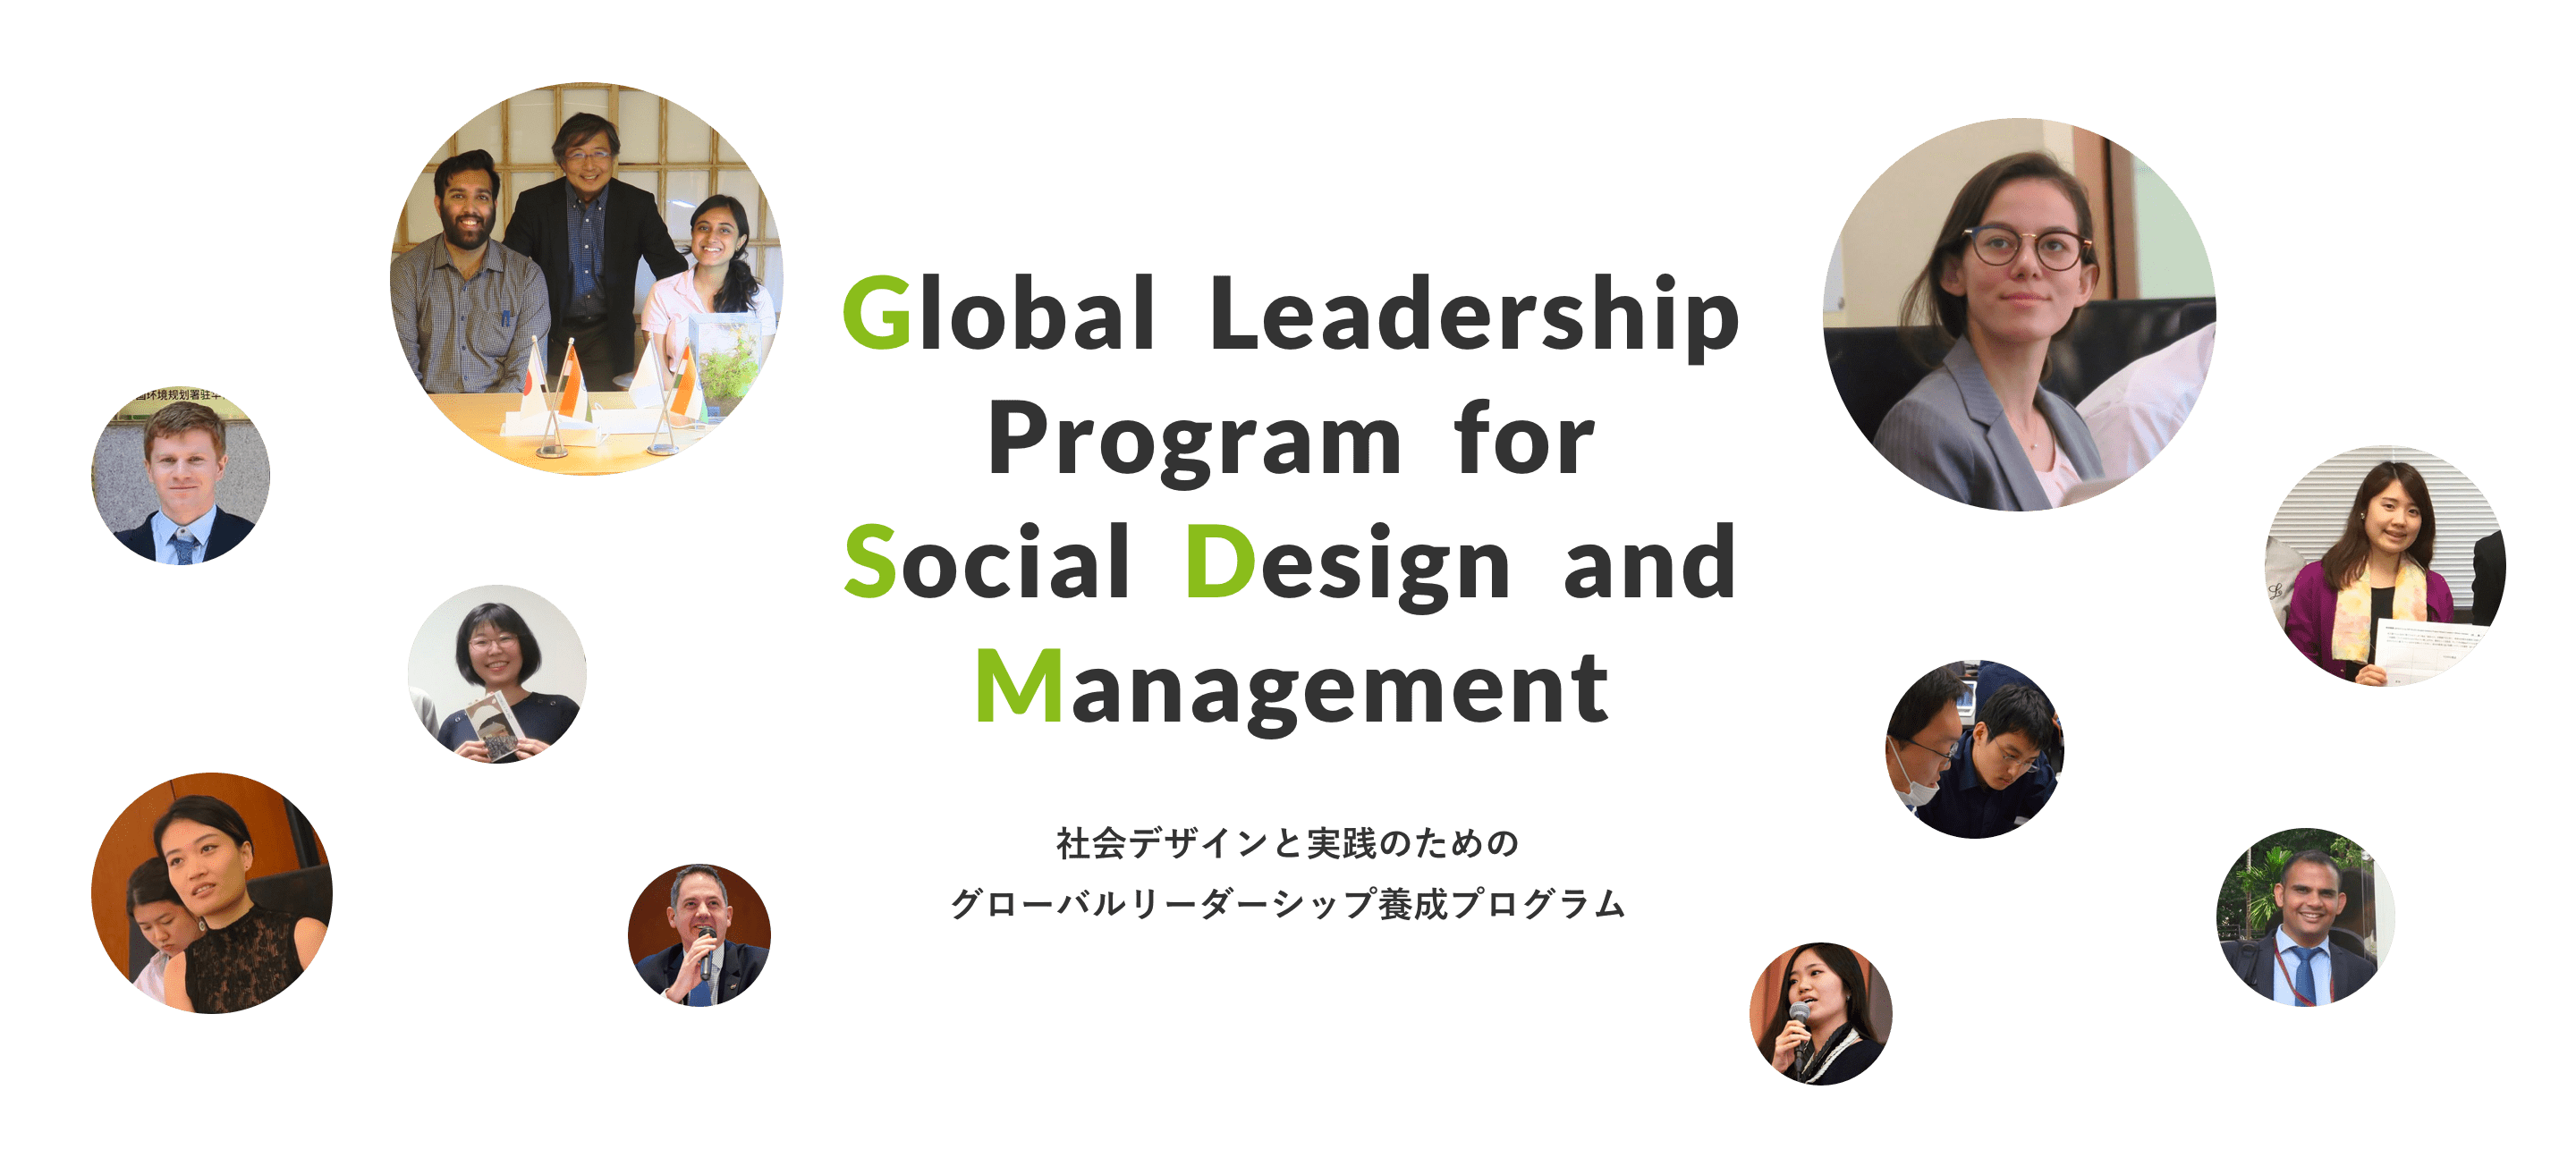 Global Leadership Program for Social Design and Management / 社会デザインと実践のためのグローバルリーダーシップ養成プログラム